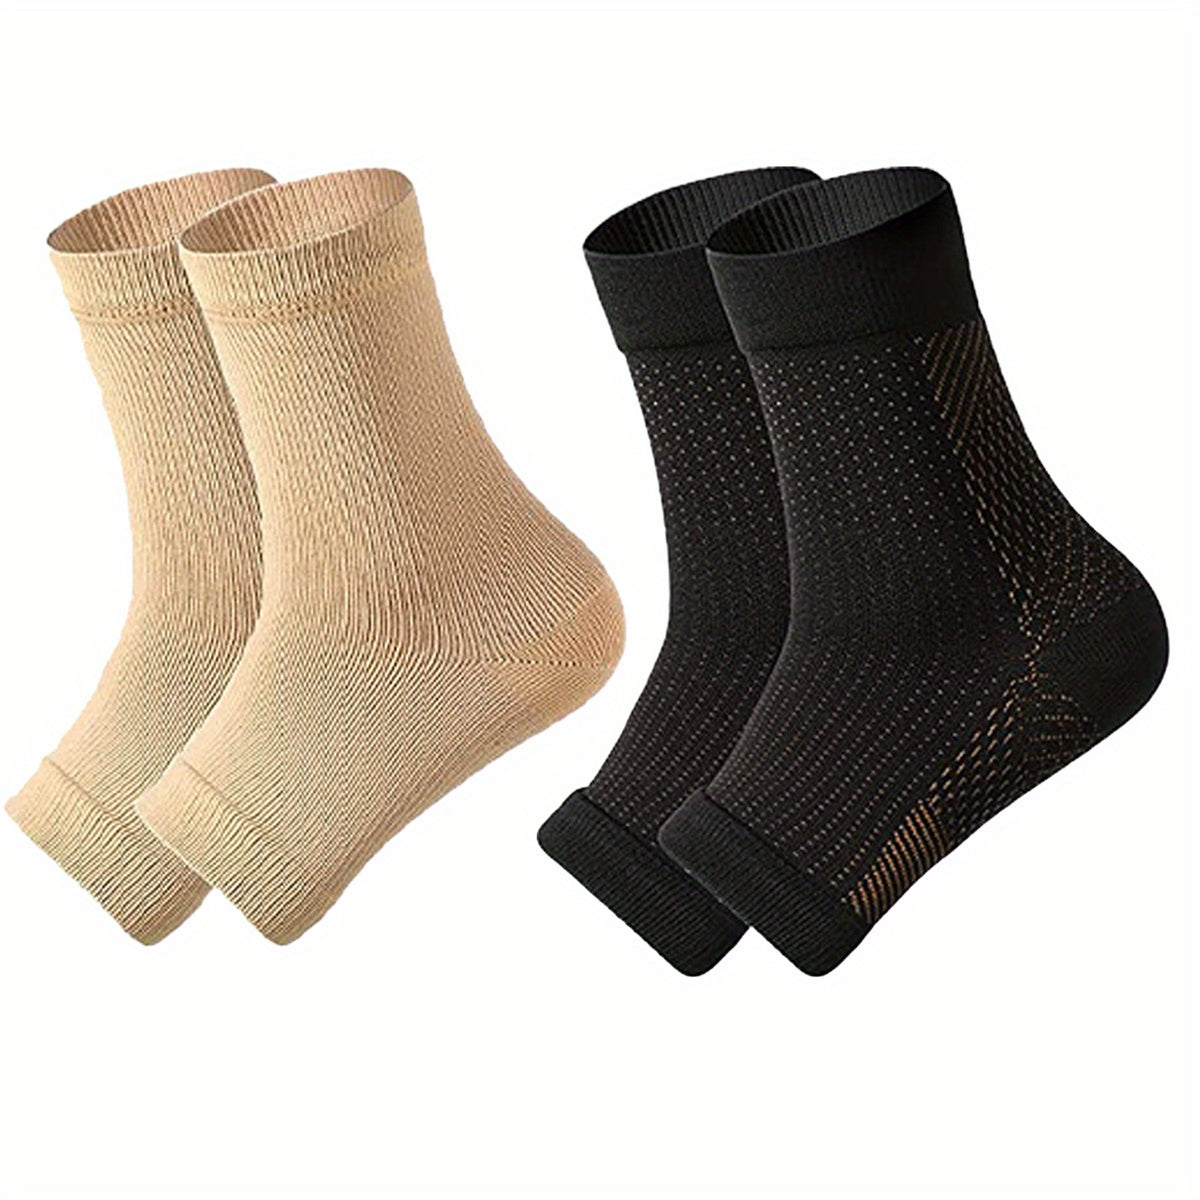 Seamless Black Neuropathy Compression Socks preventing irritation